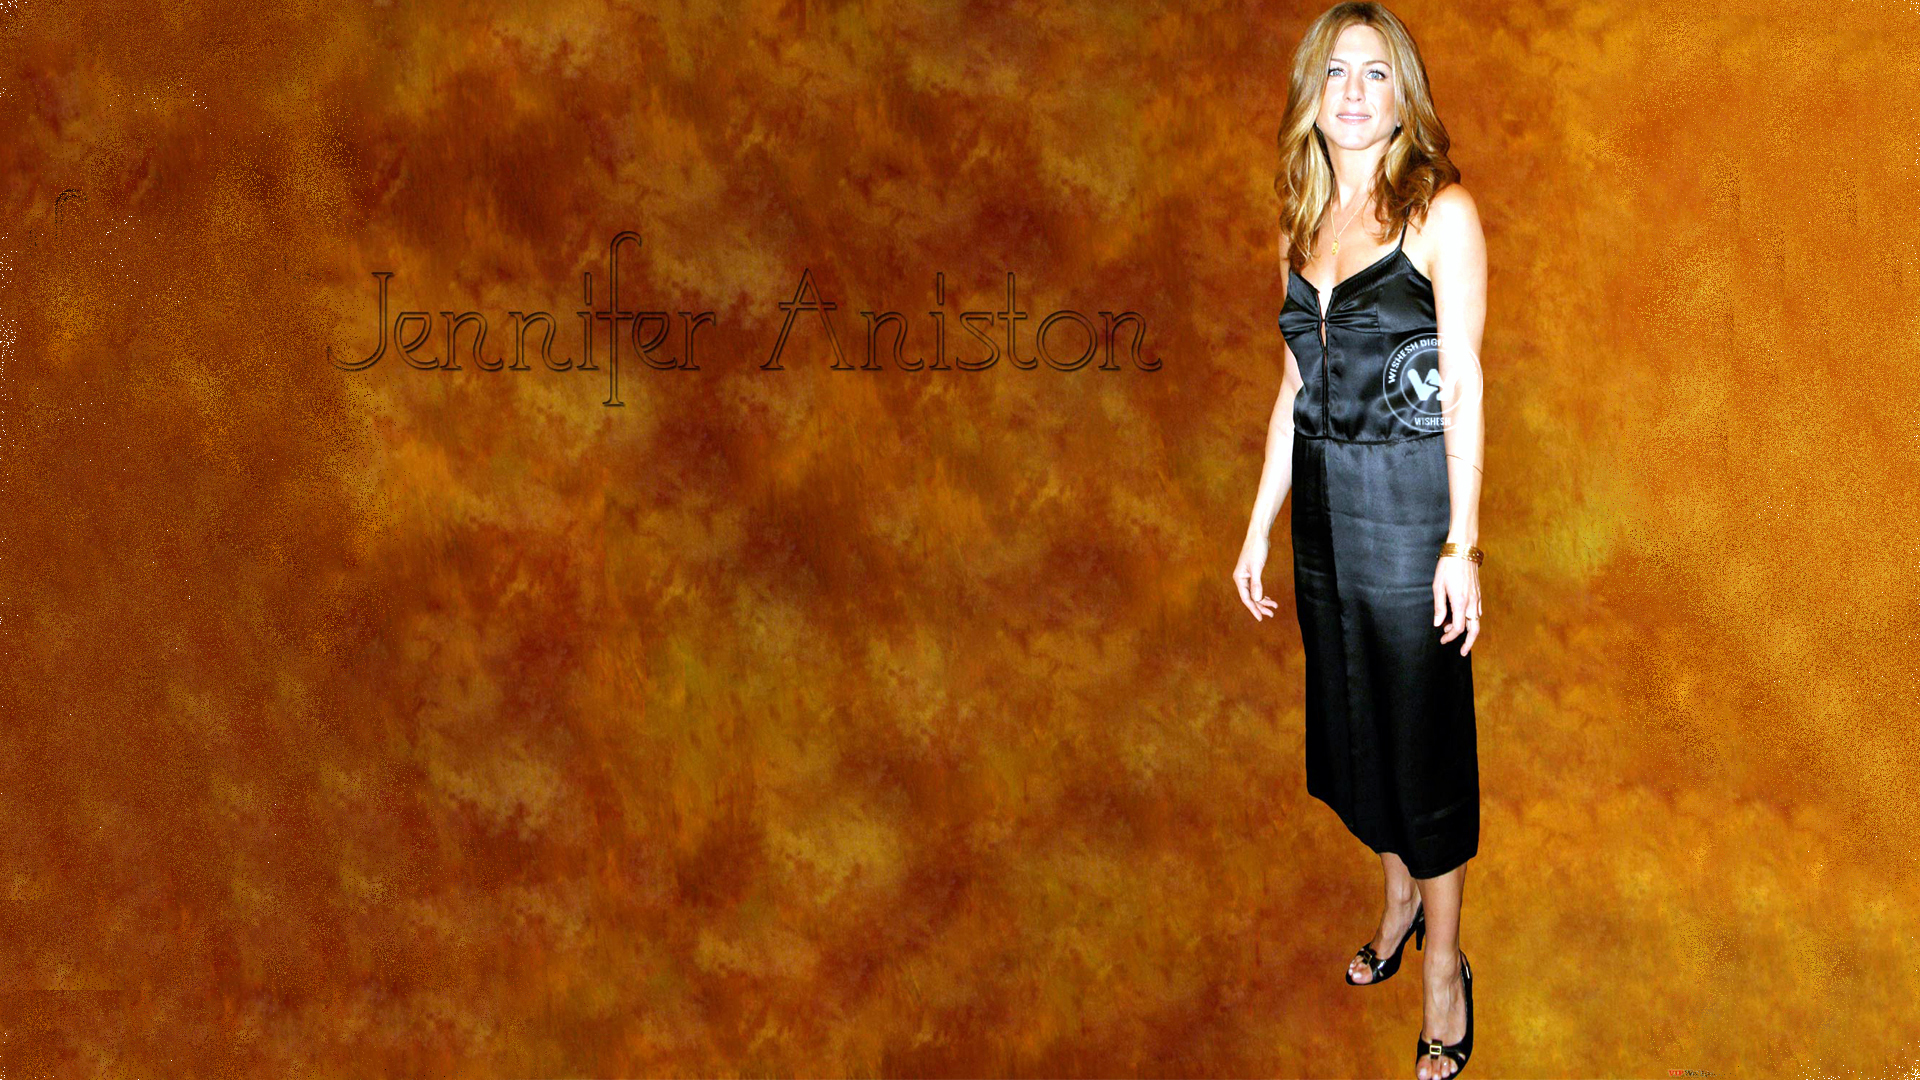 Hot Actress Jennifer Aniston Latest Stills | Jennifer Aniston Hot Latest Images | Jennifer Aniston Hot Latest Wallpapers | Wallpaper 8of 10